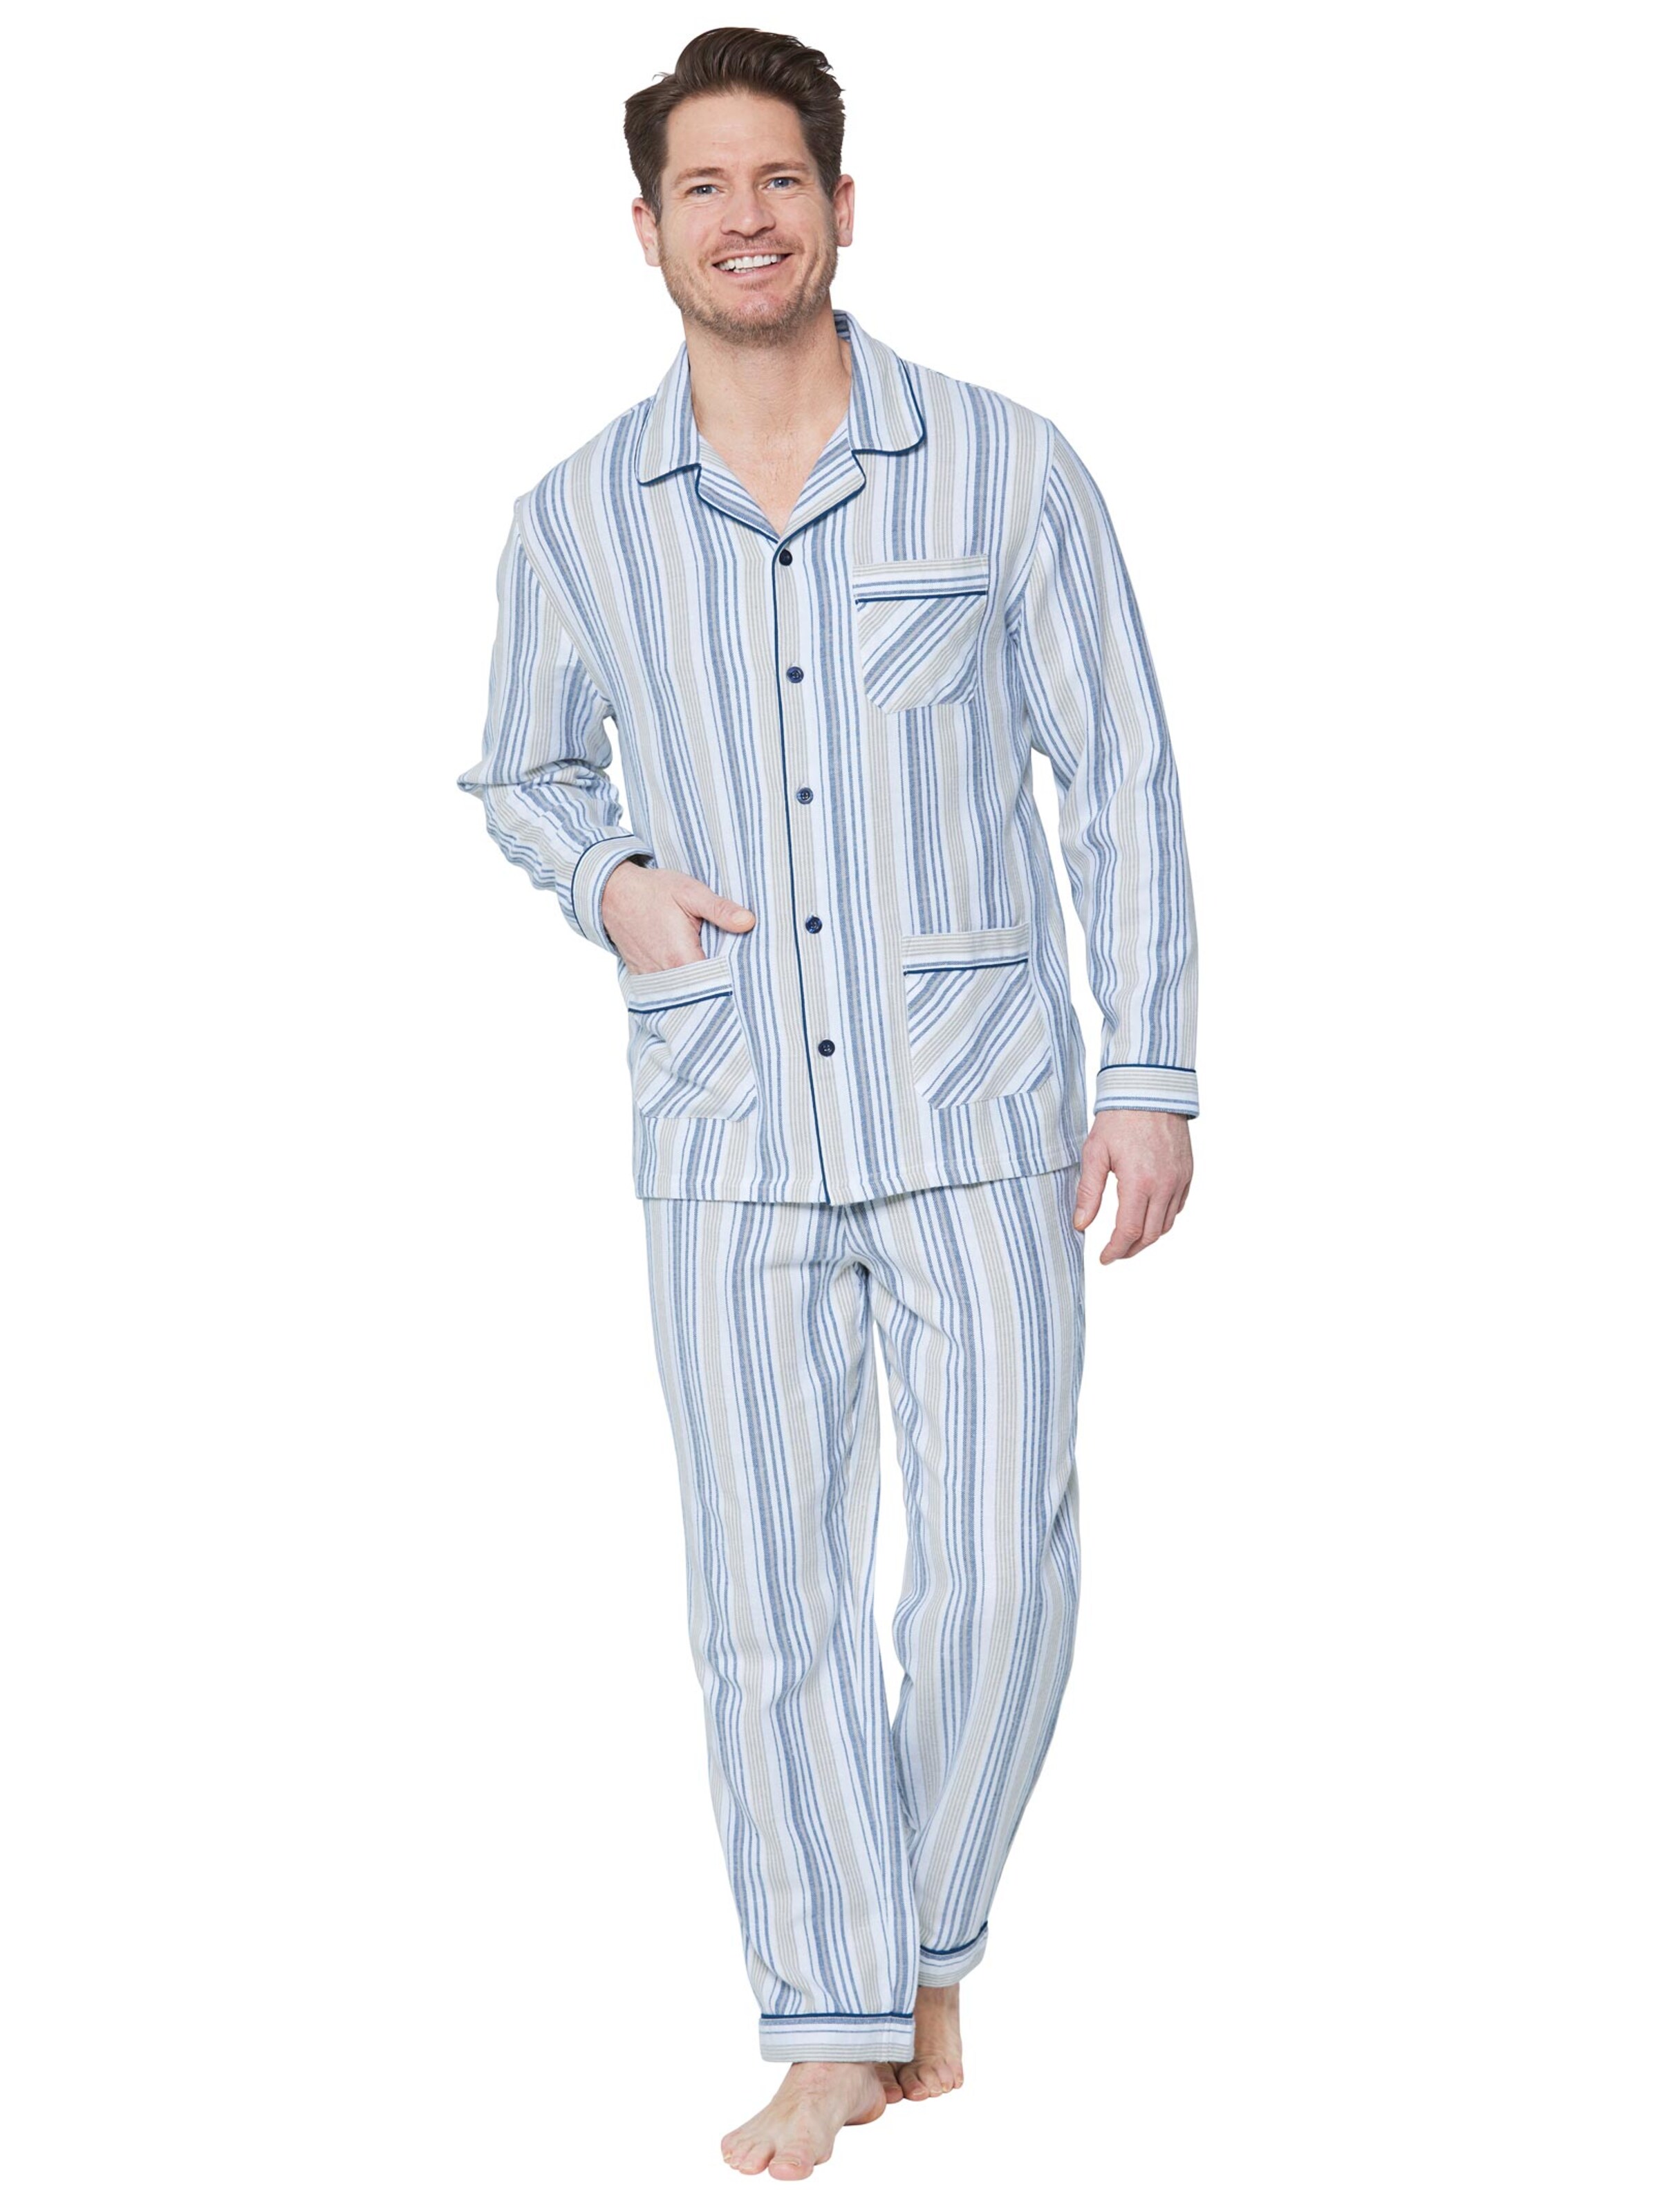 Pyjama In Blau Gestreift Witt Weiden